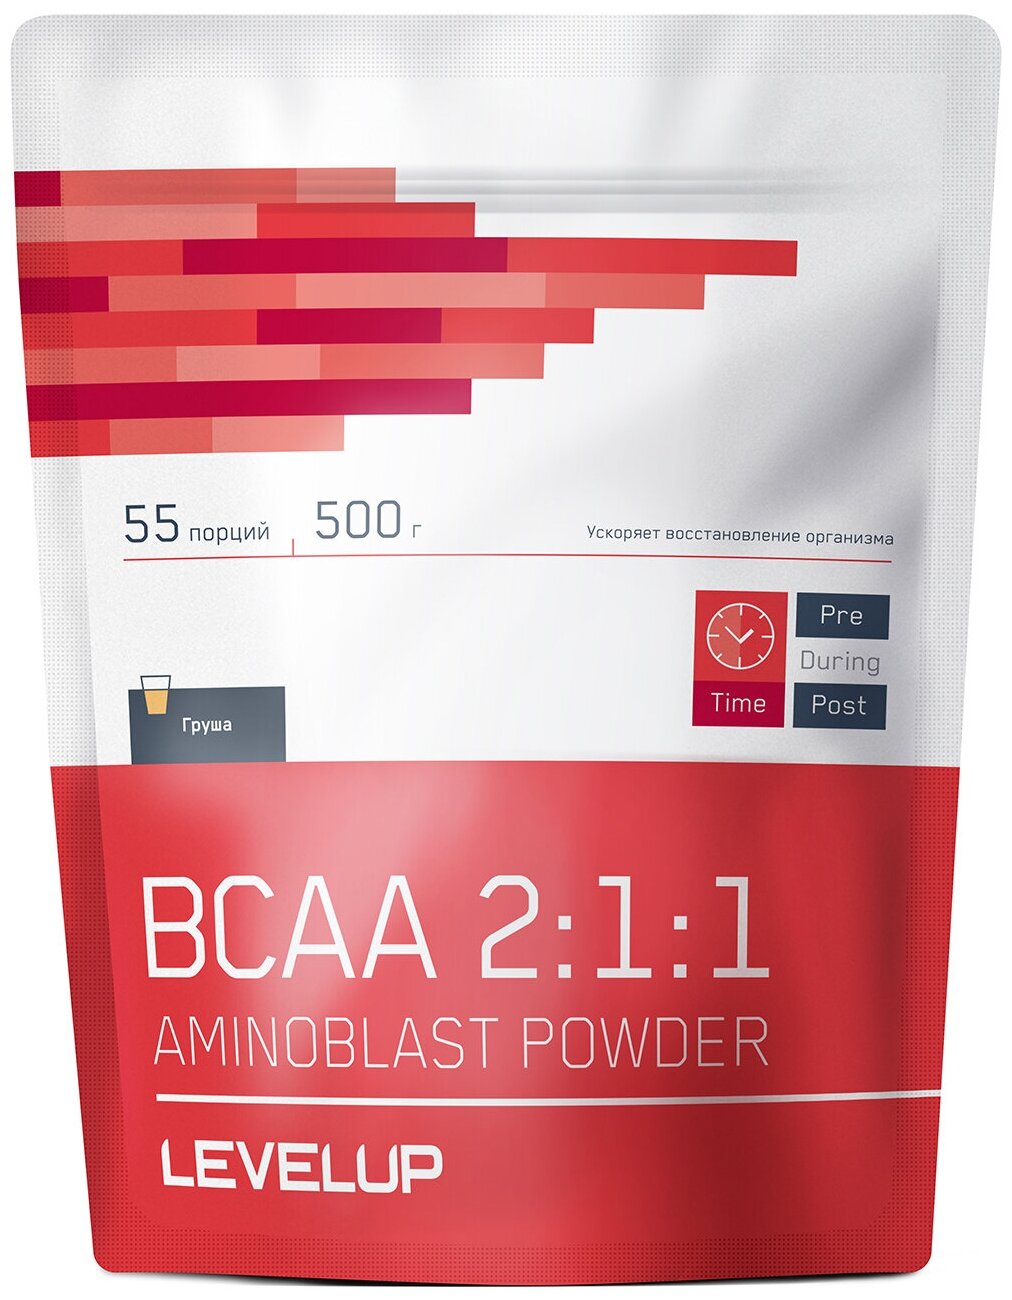 LevelUp Aminoblast BCAA Powder, 500 g (груша)